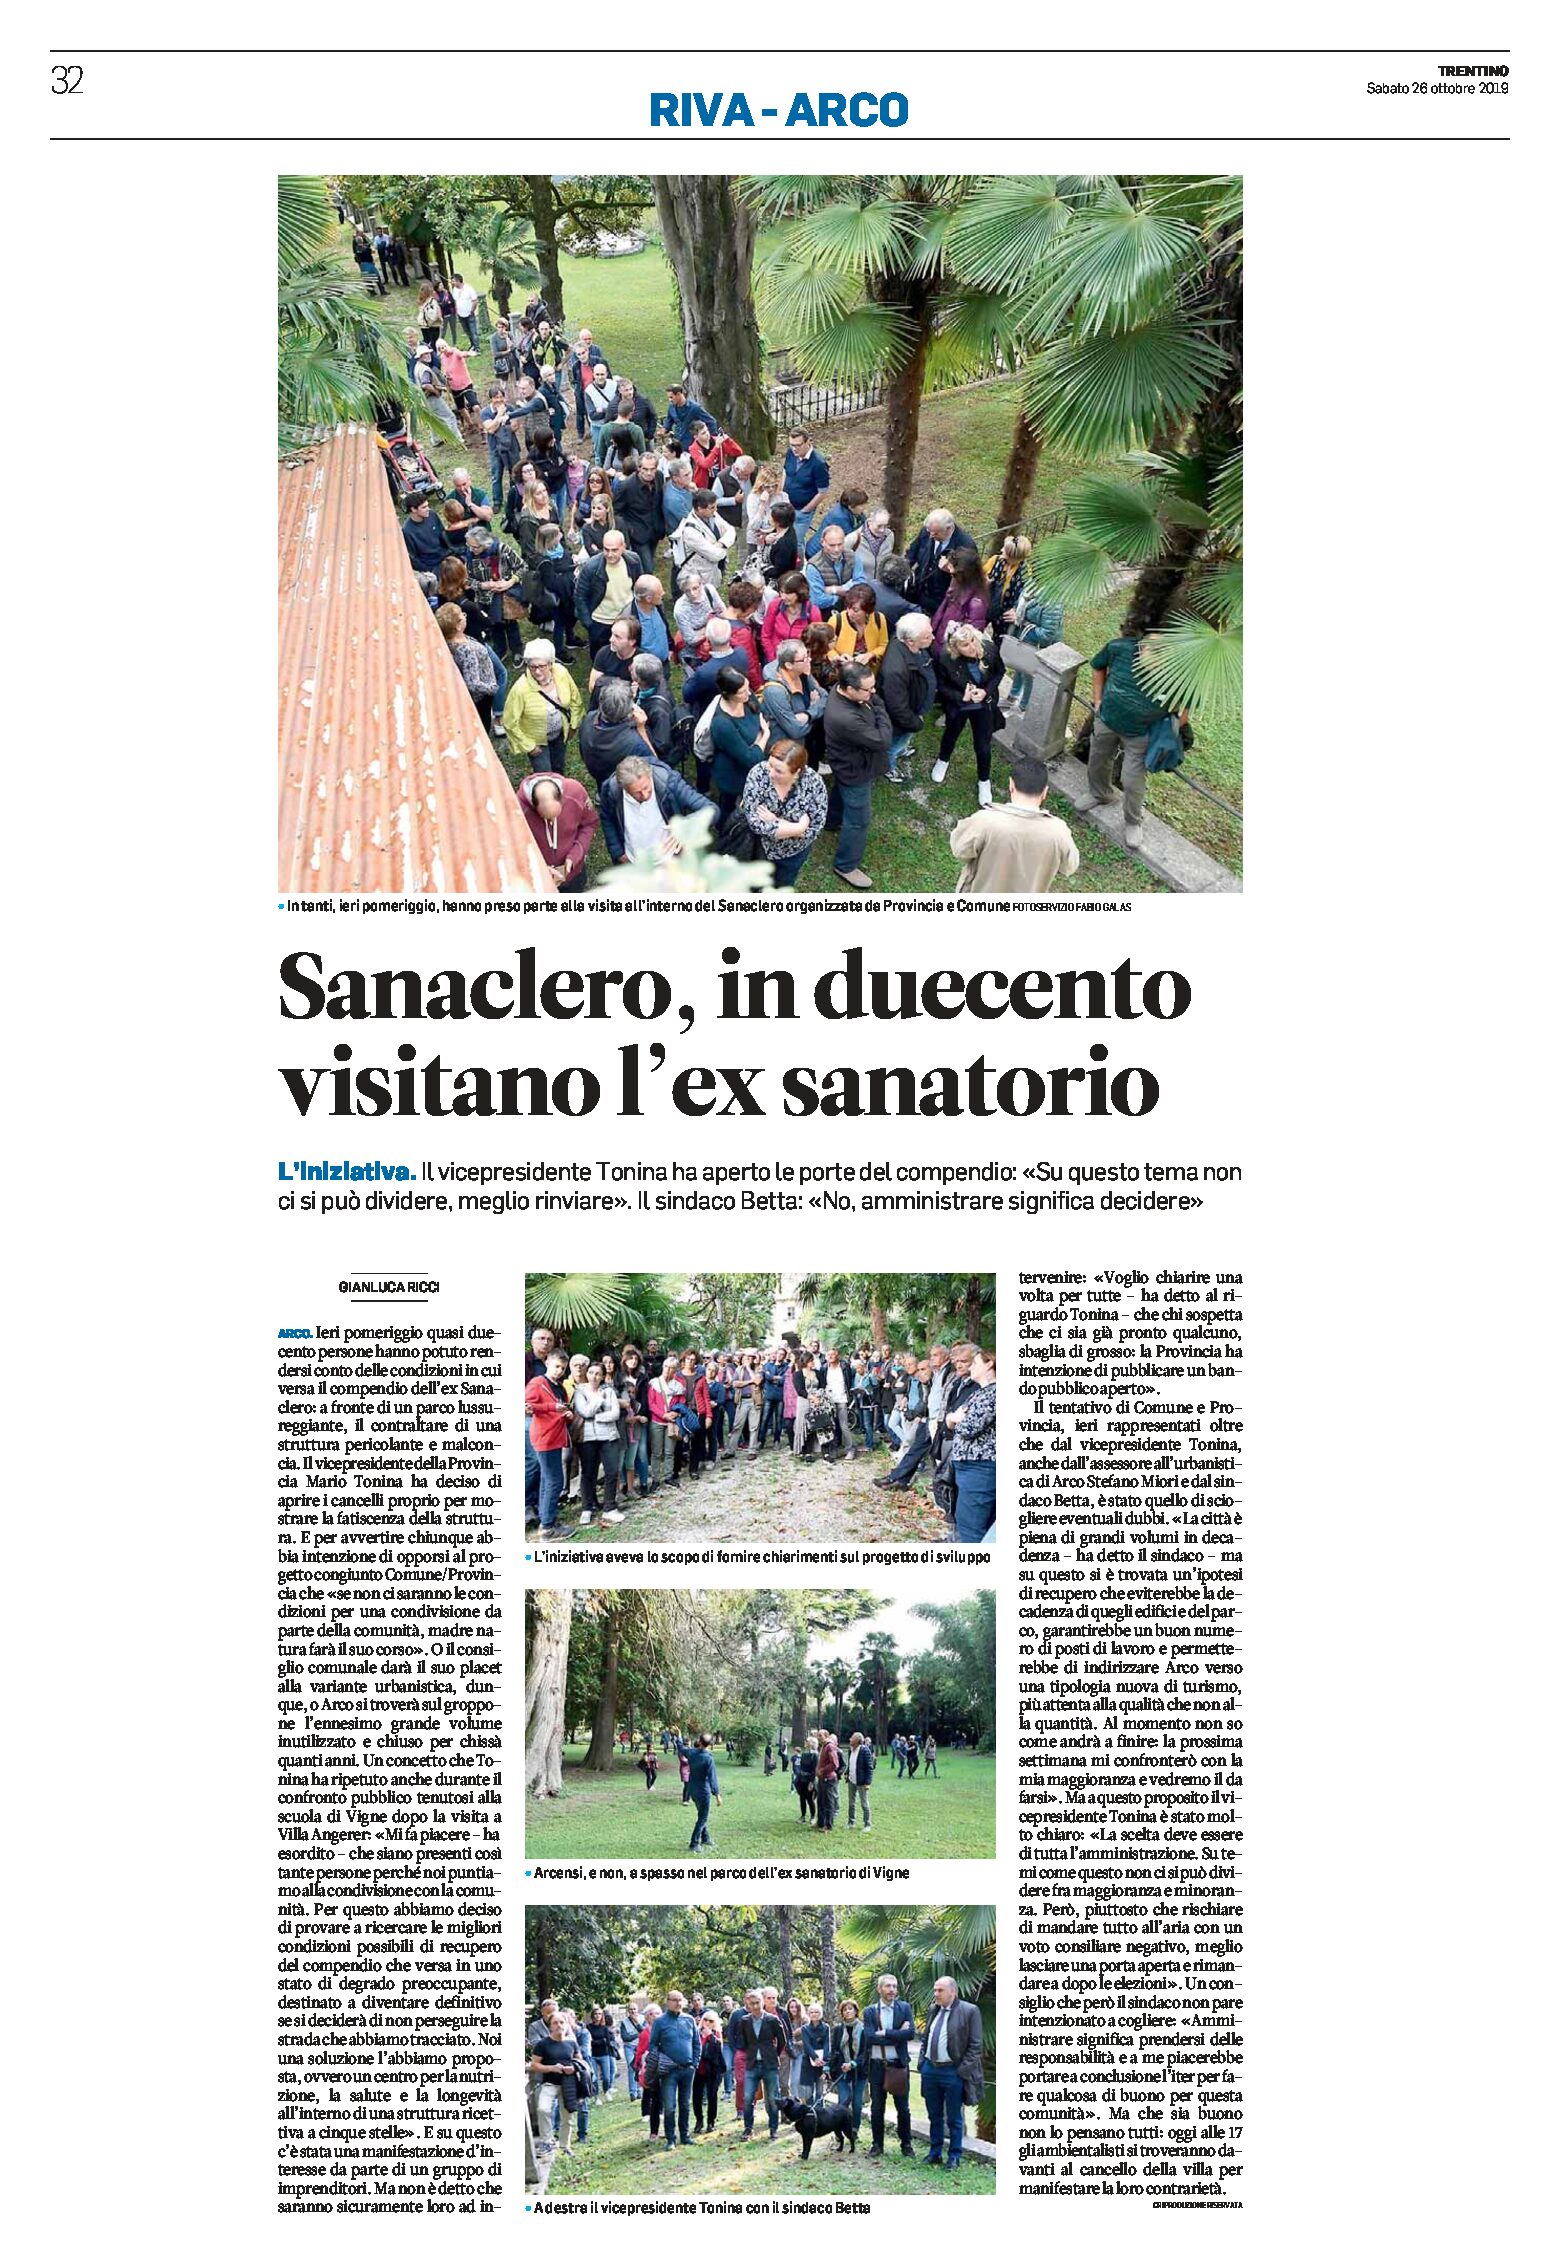 Arco, ex Sanaclero: in 200 visitano villa Angerer